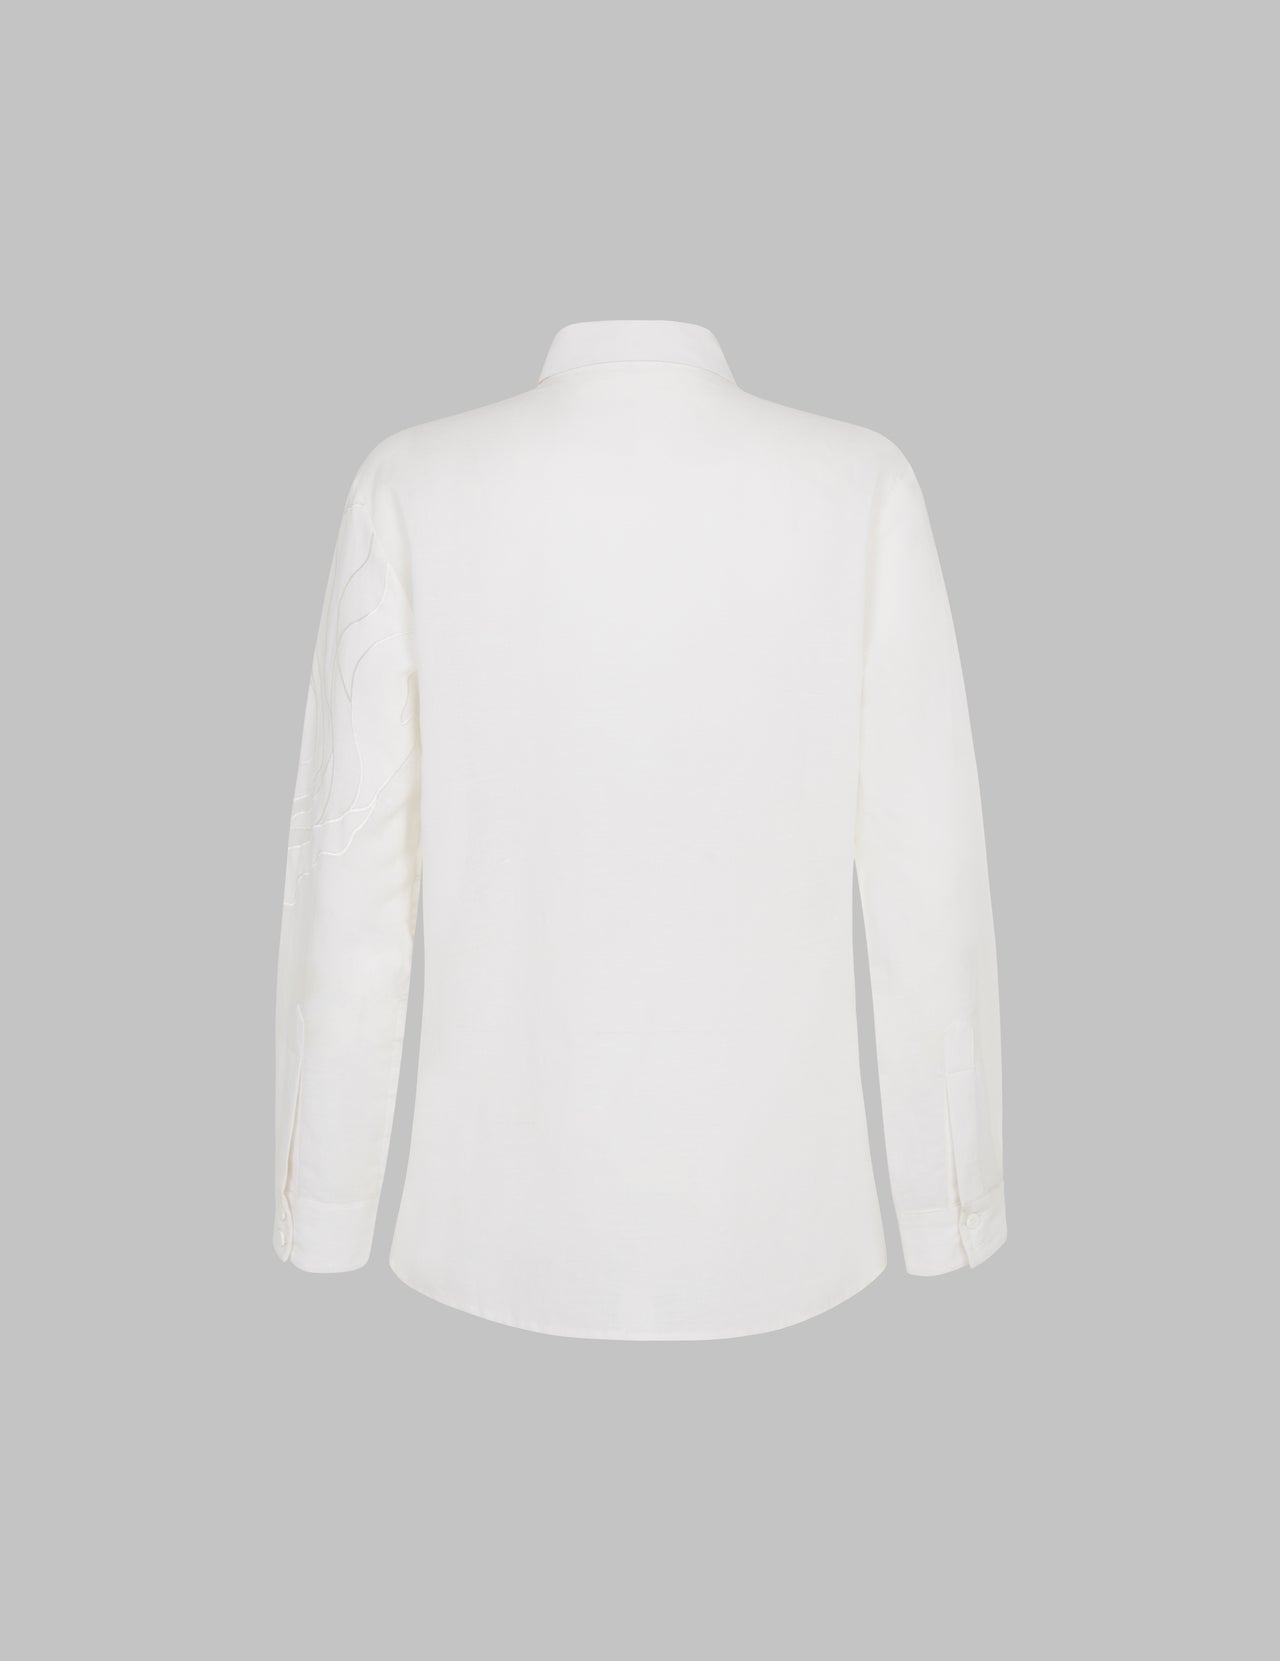  White Linen Embroidered Palmer Shirt 